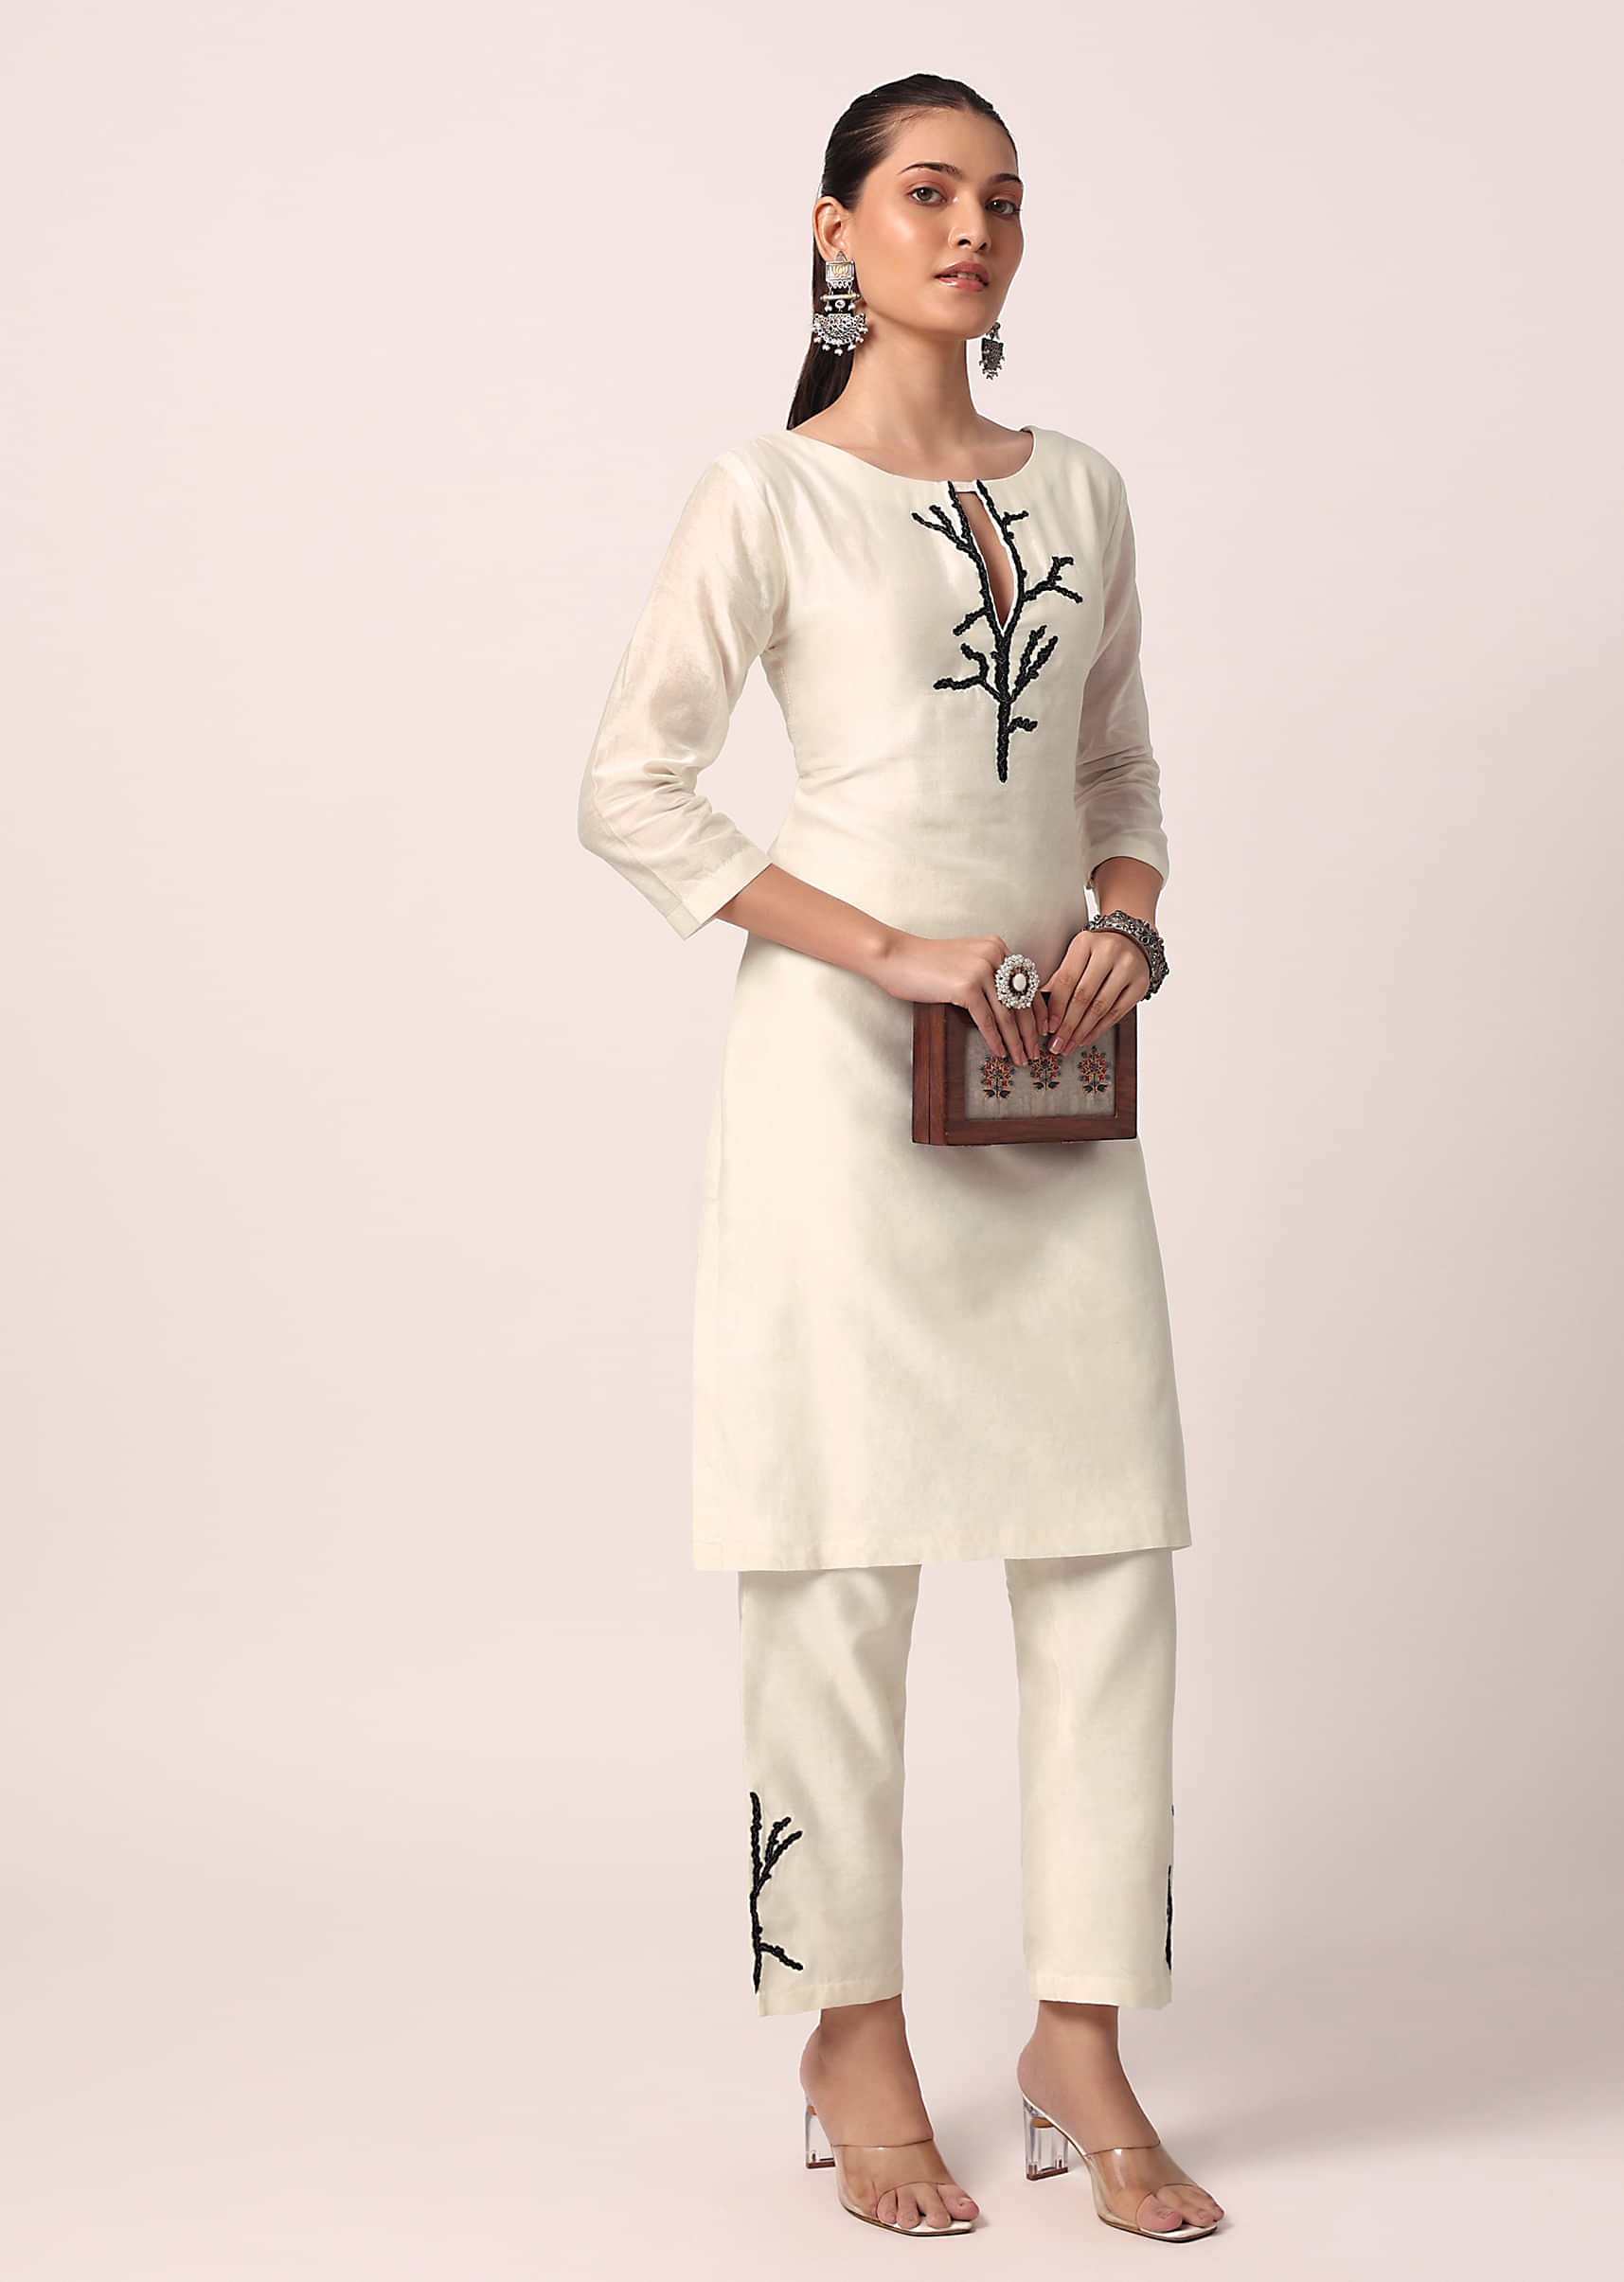 Buy Irresitibe White Knitted Saree Shapewear with Drawstring Online. –